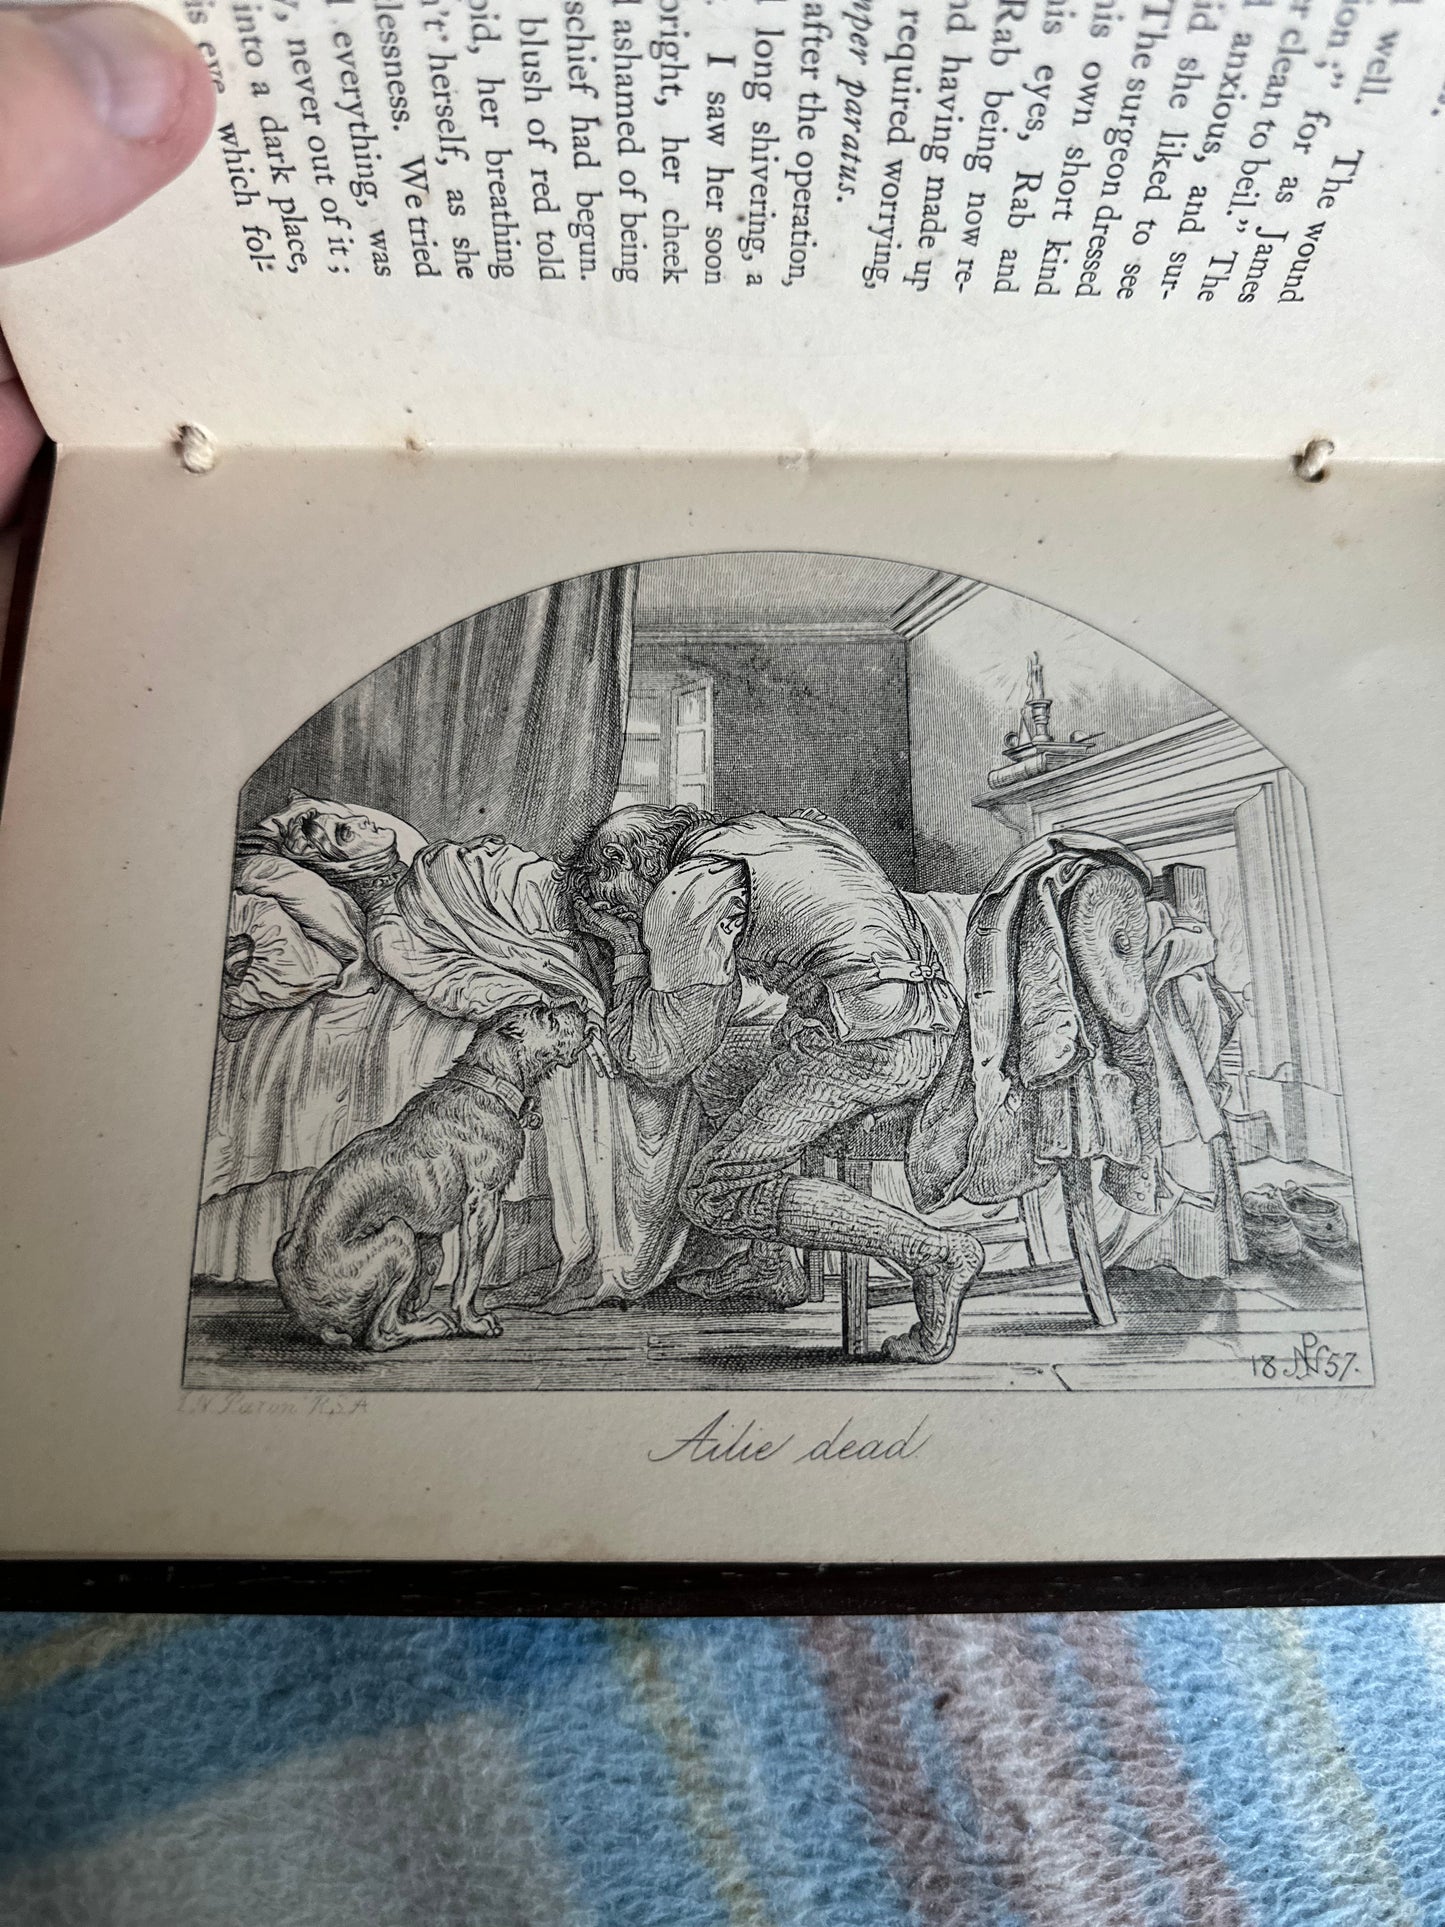 1877 Rab & His Friends - John Brown(David Douglas Edinburgh Publisher) Wooden covers